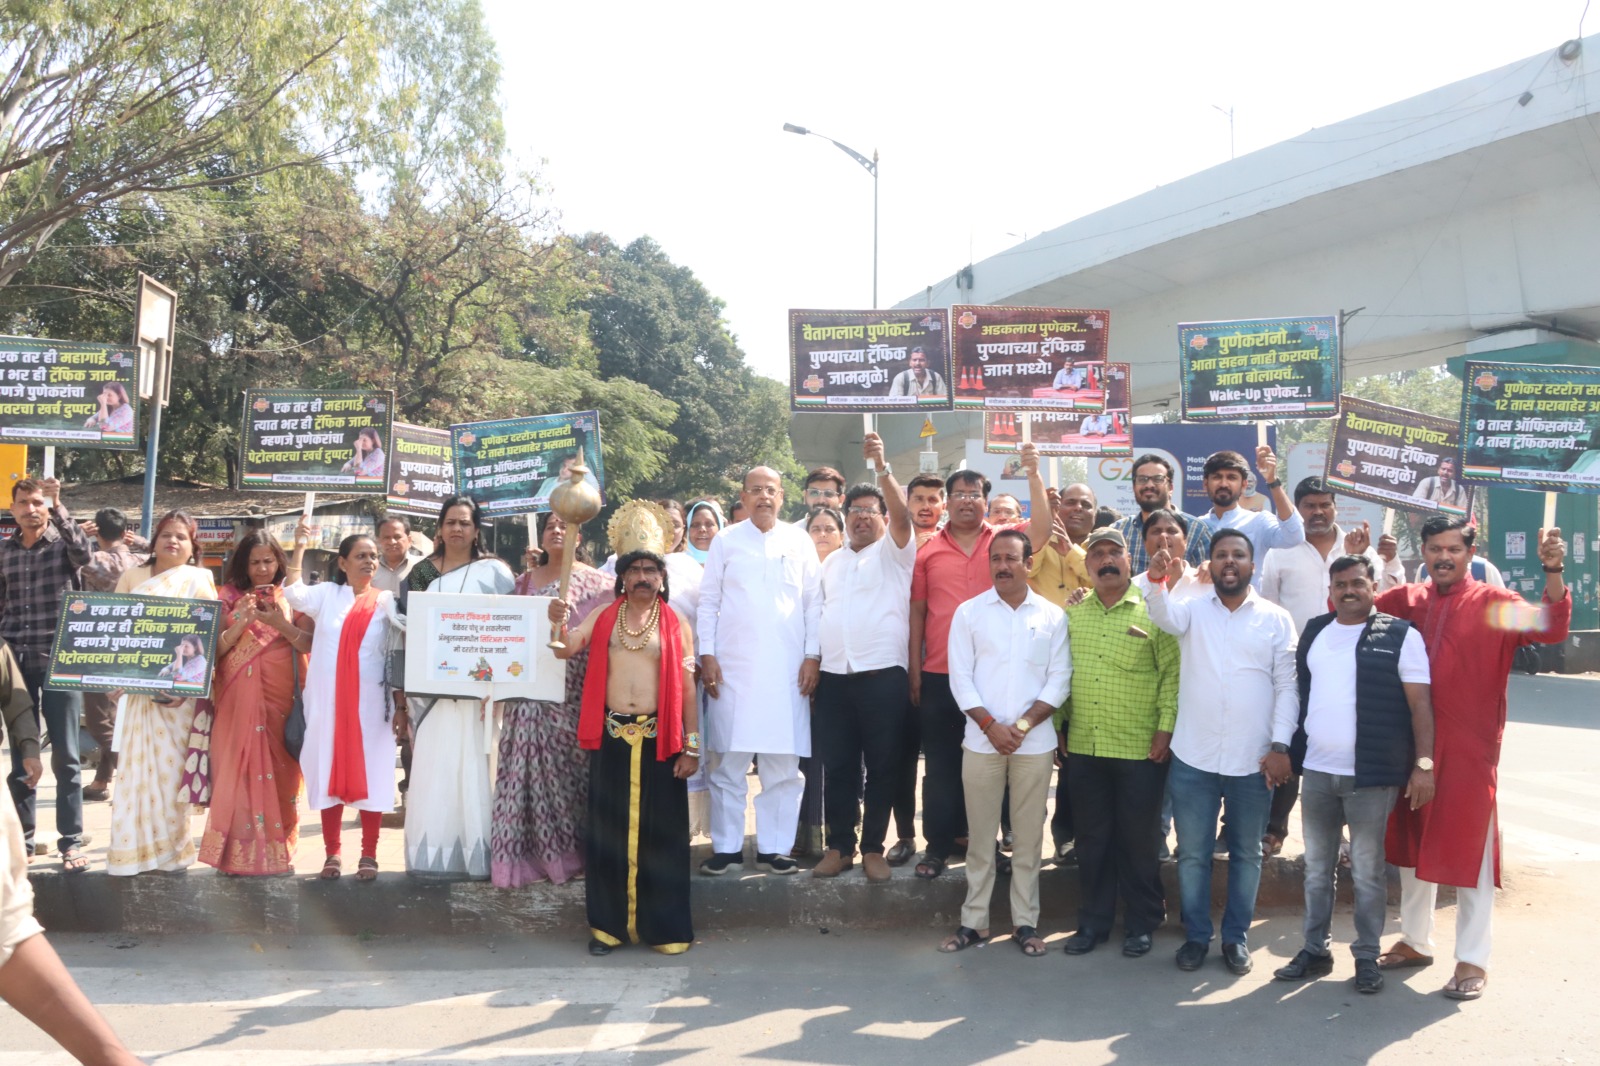  Wakeup Punekar movement  Known problems at Swargate Chowk  |  Convenor Mohan Joshi